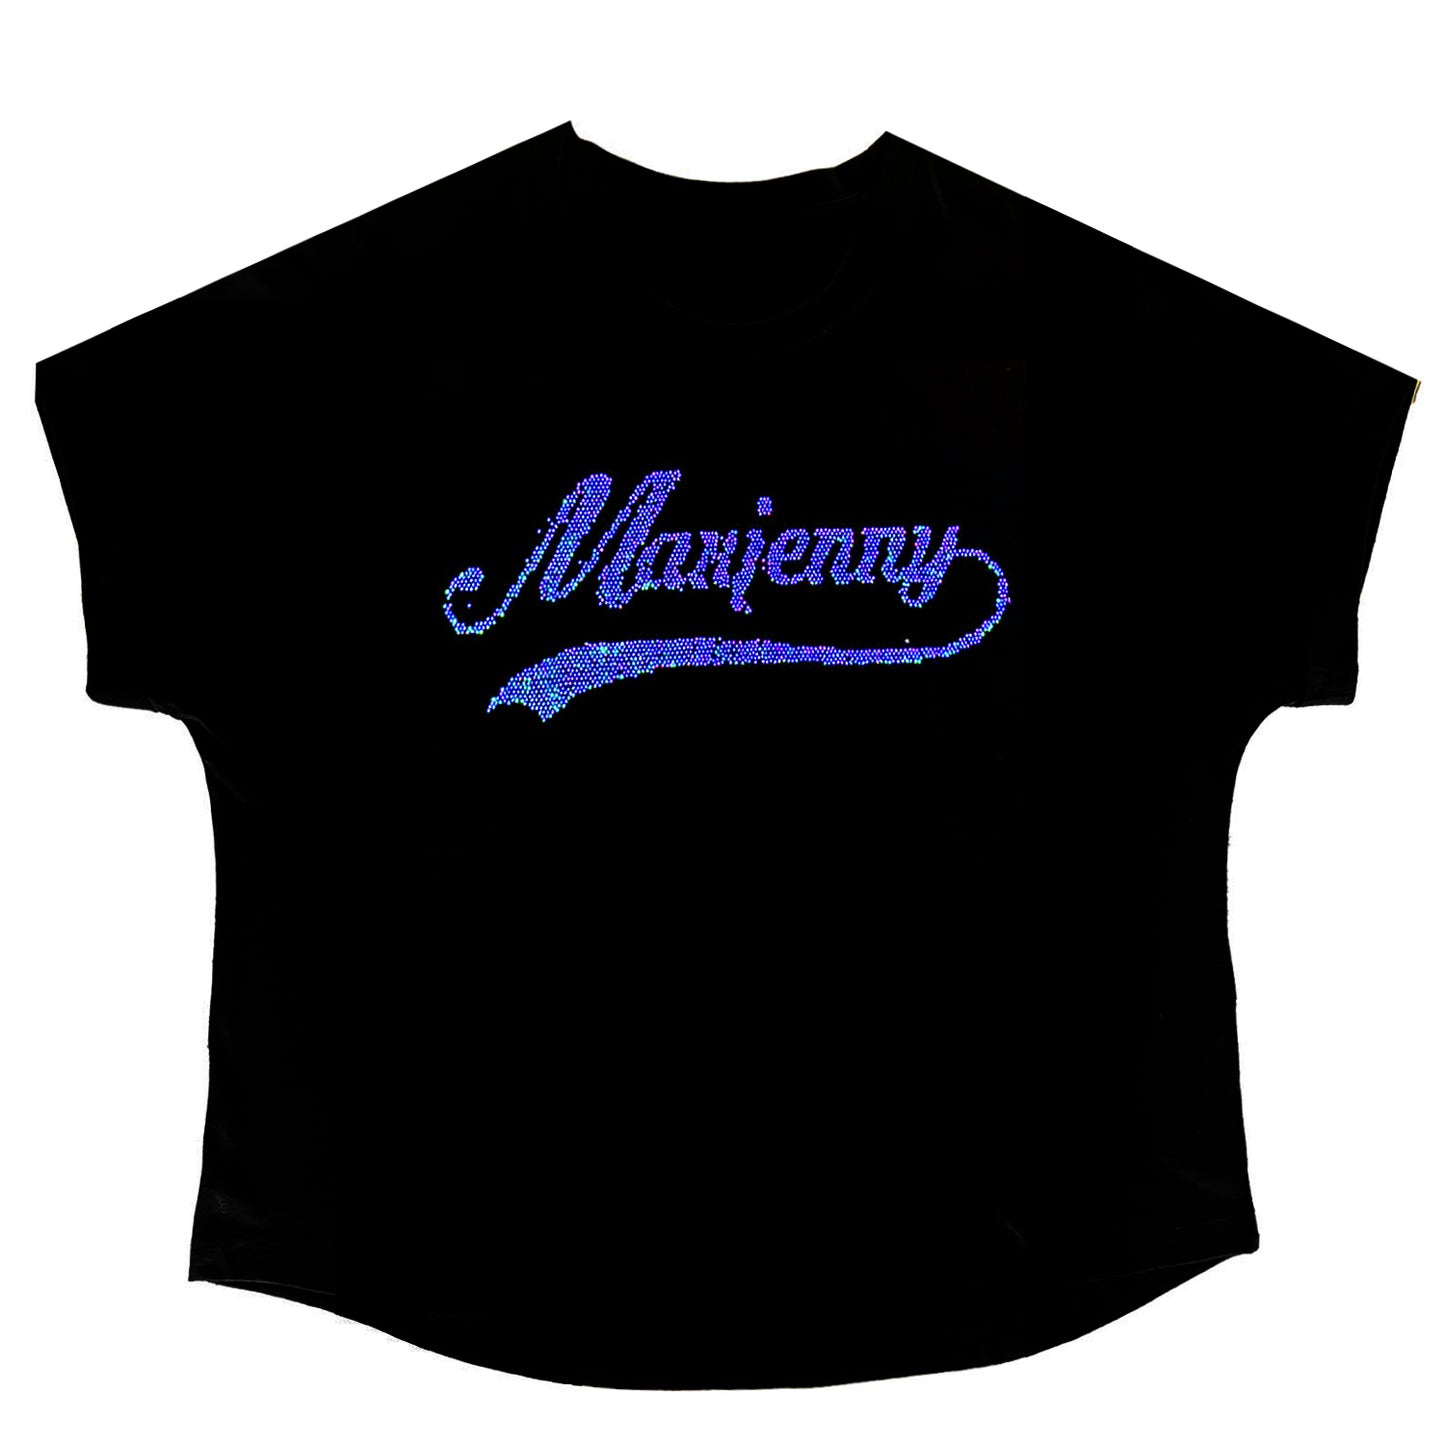 Maxjenny swoosh blue swarovski t-shirt